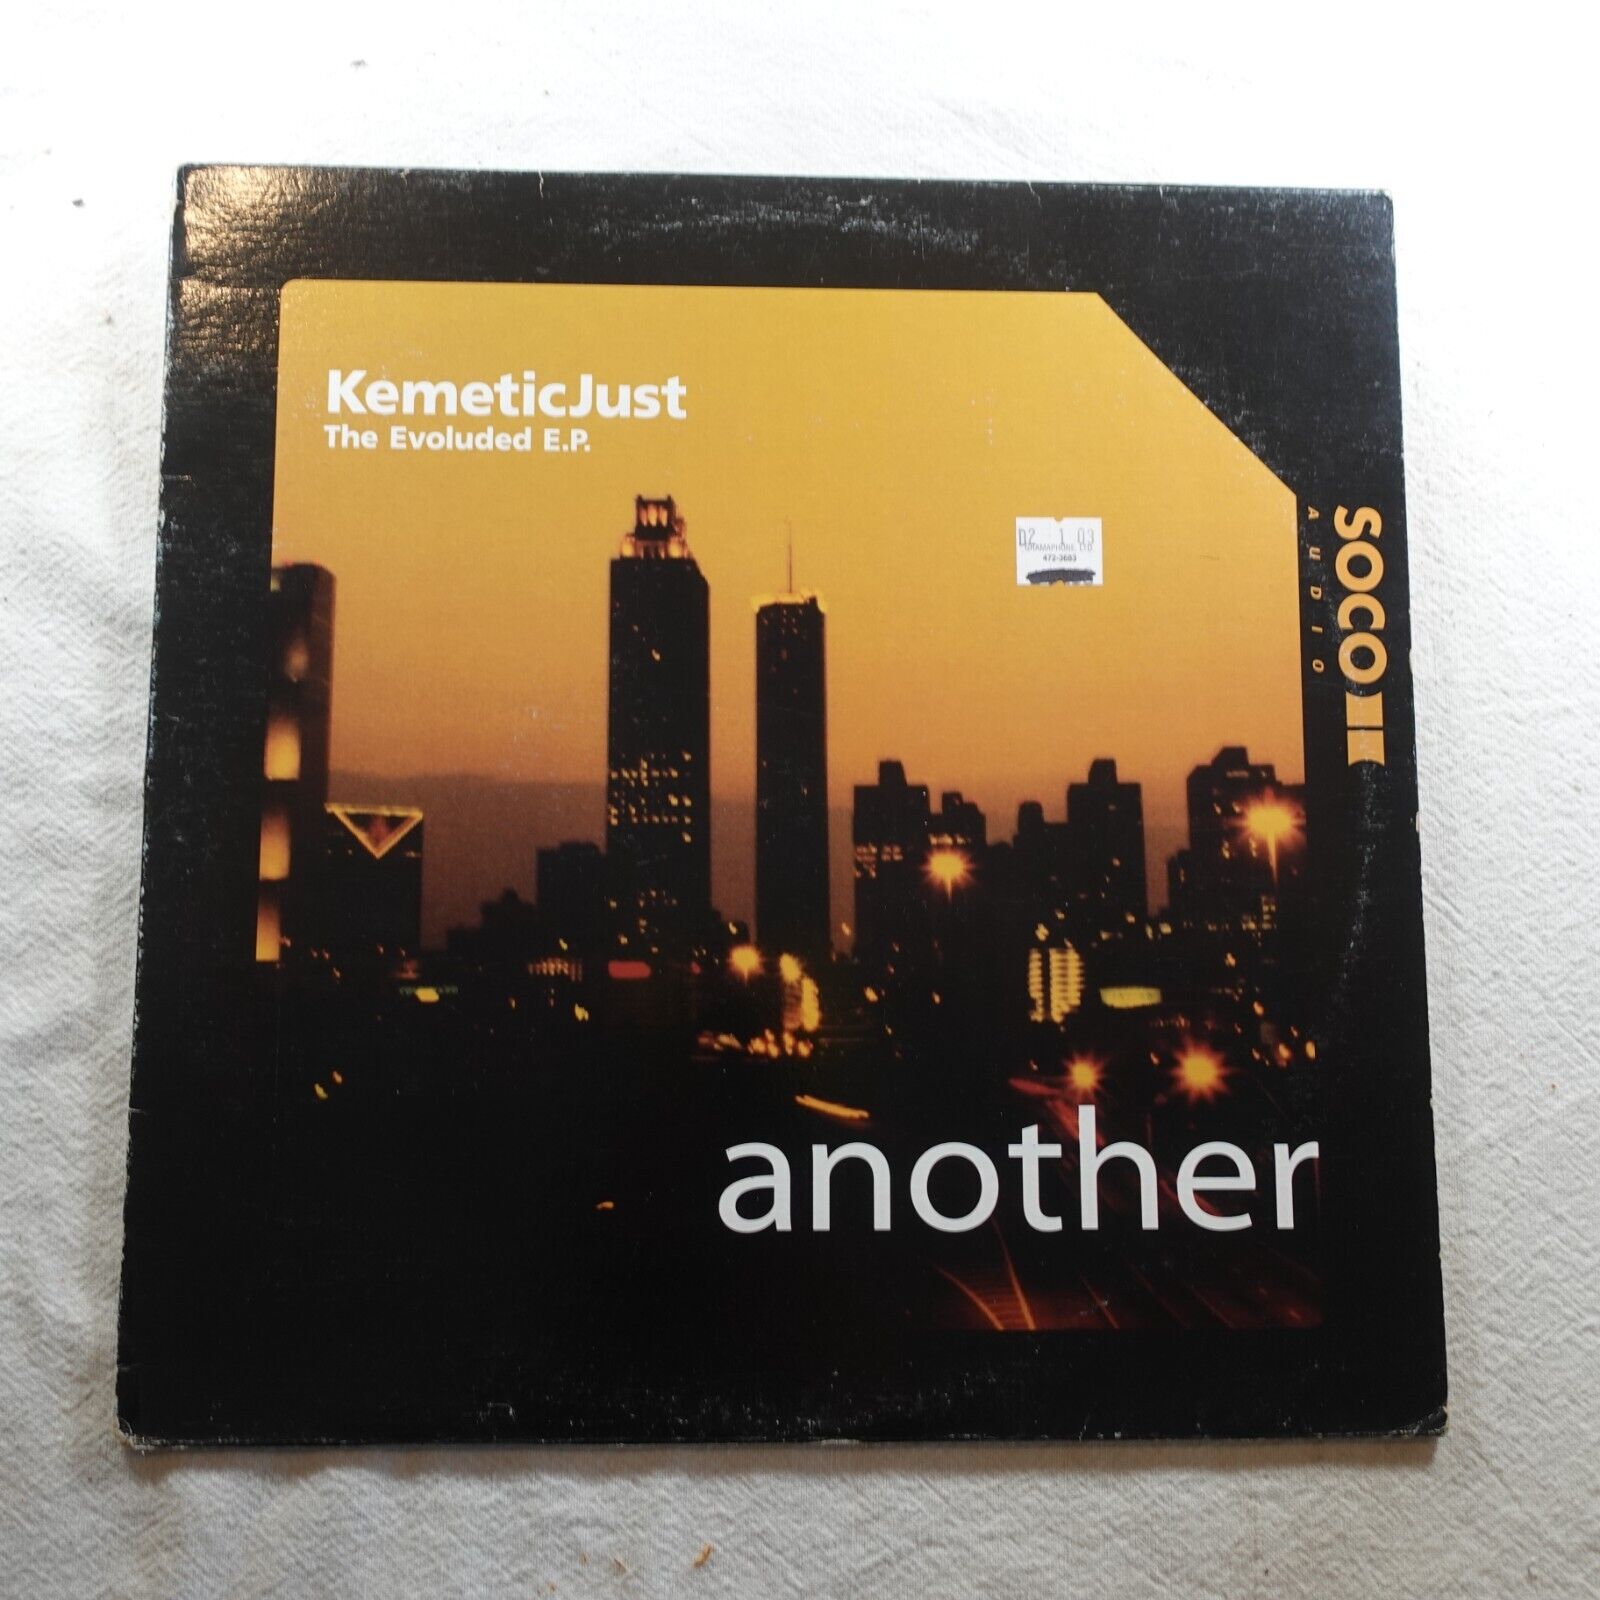 Kemetic Just The Evoluded EP   Record Album Vinyl LP